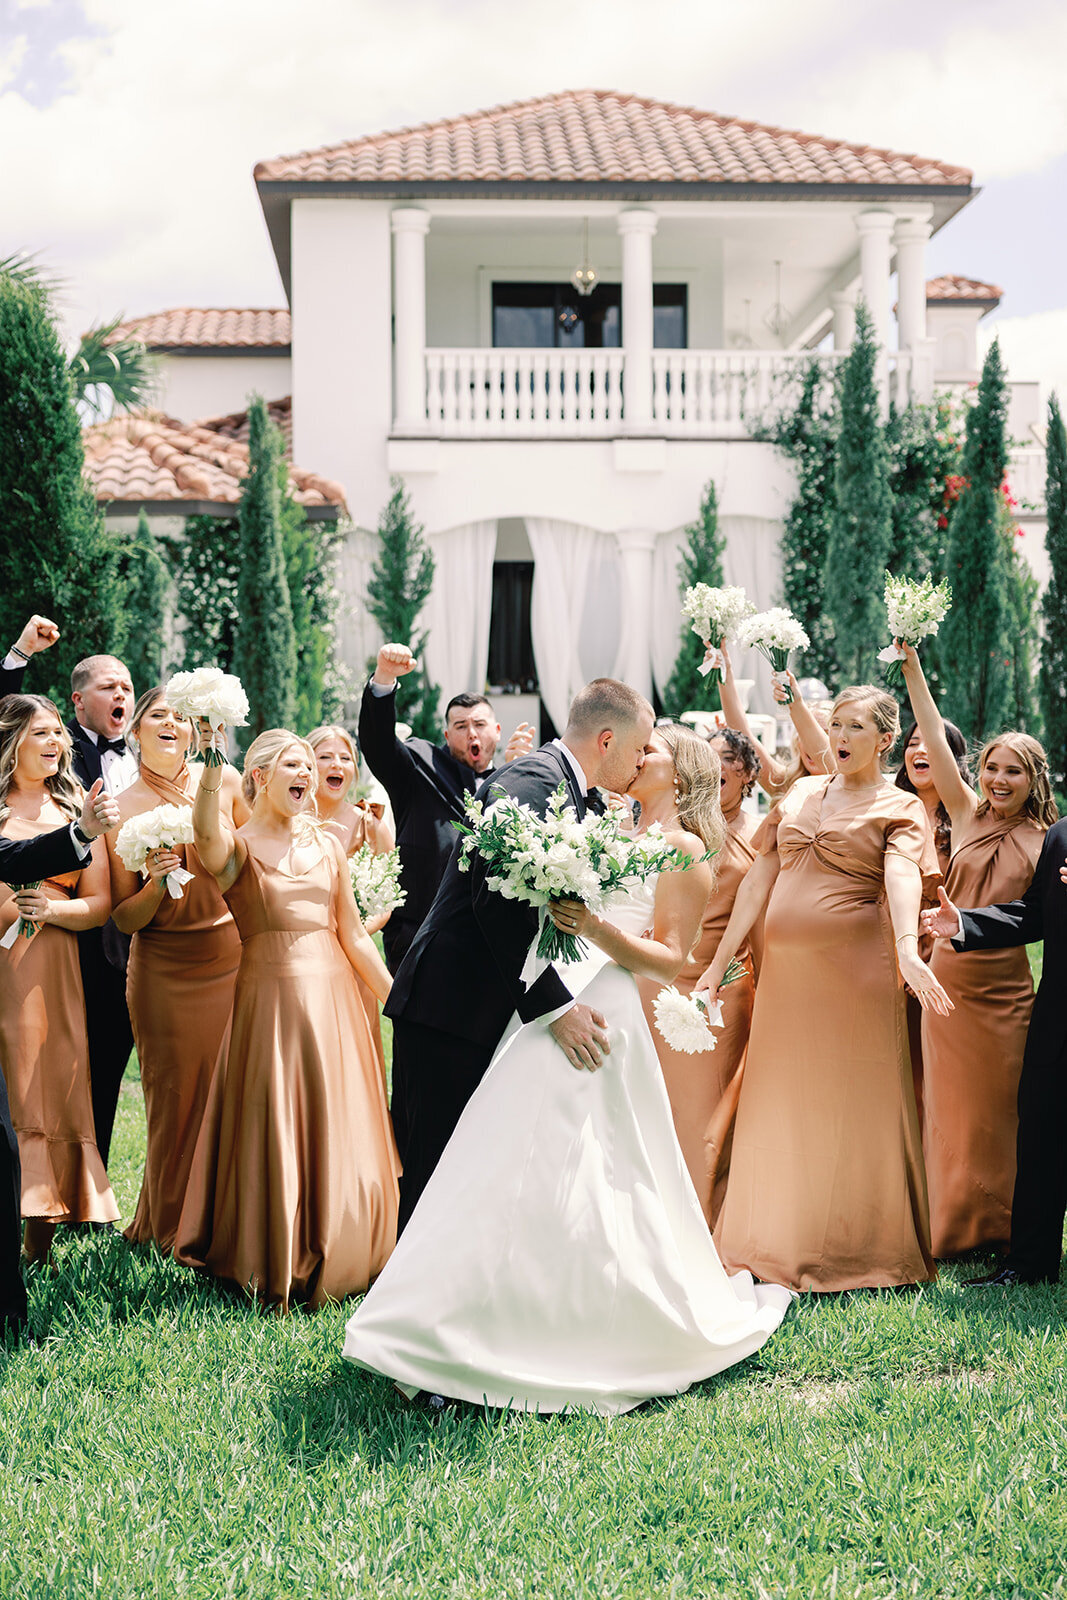 CORNELIA ZAISS PHOTOGRAPHY LEAH + ROBERT'S WEDDING 0350_websize